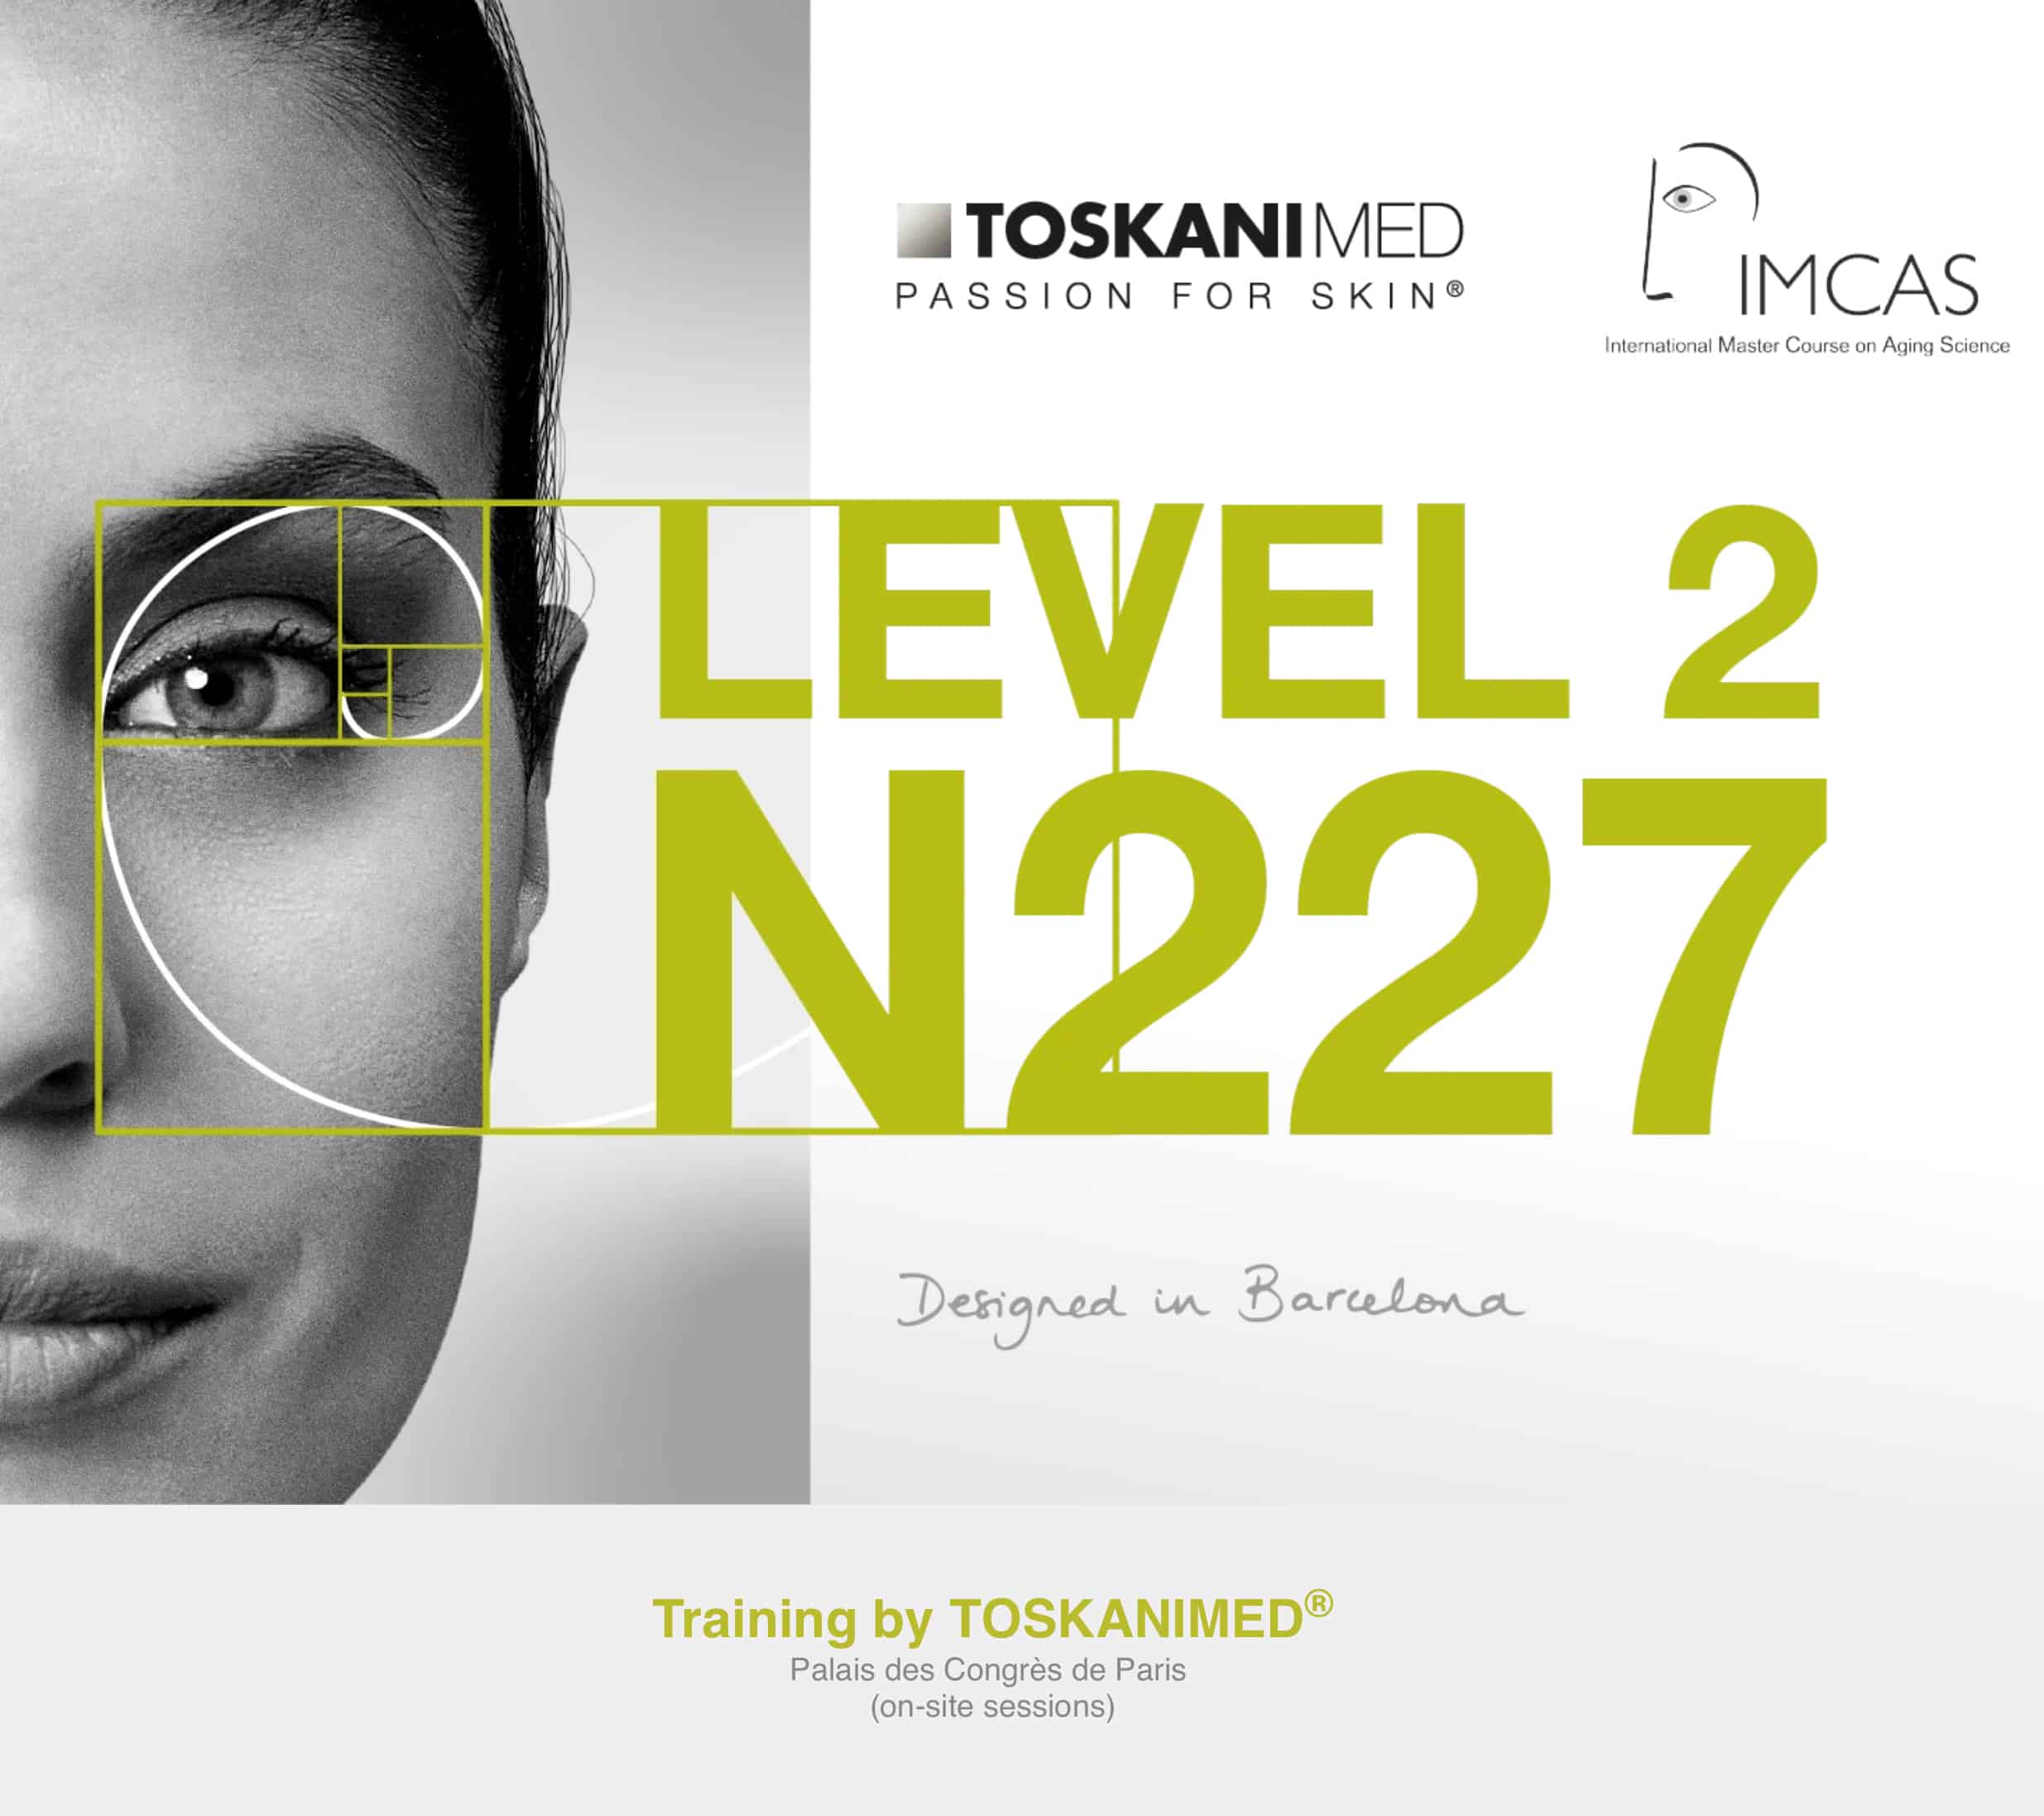 Training by TOSKANIMED®